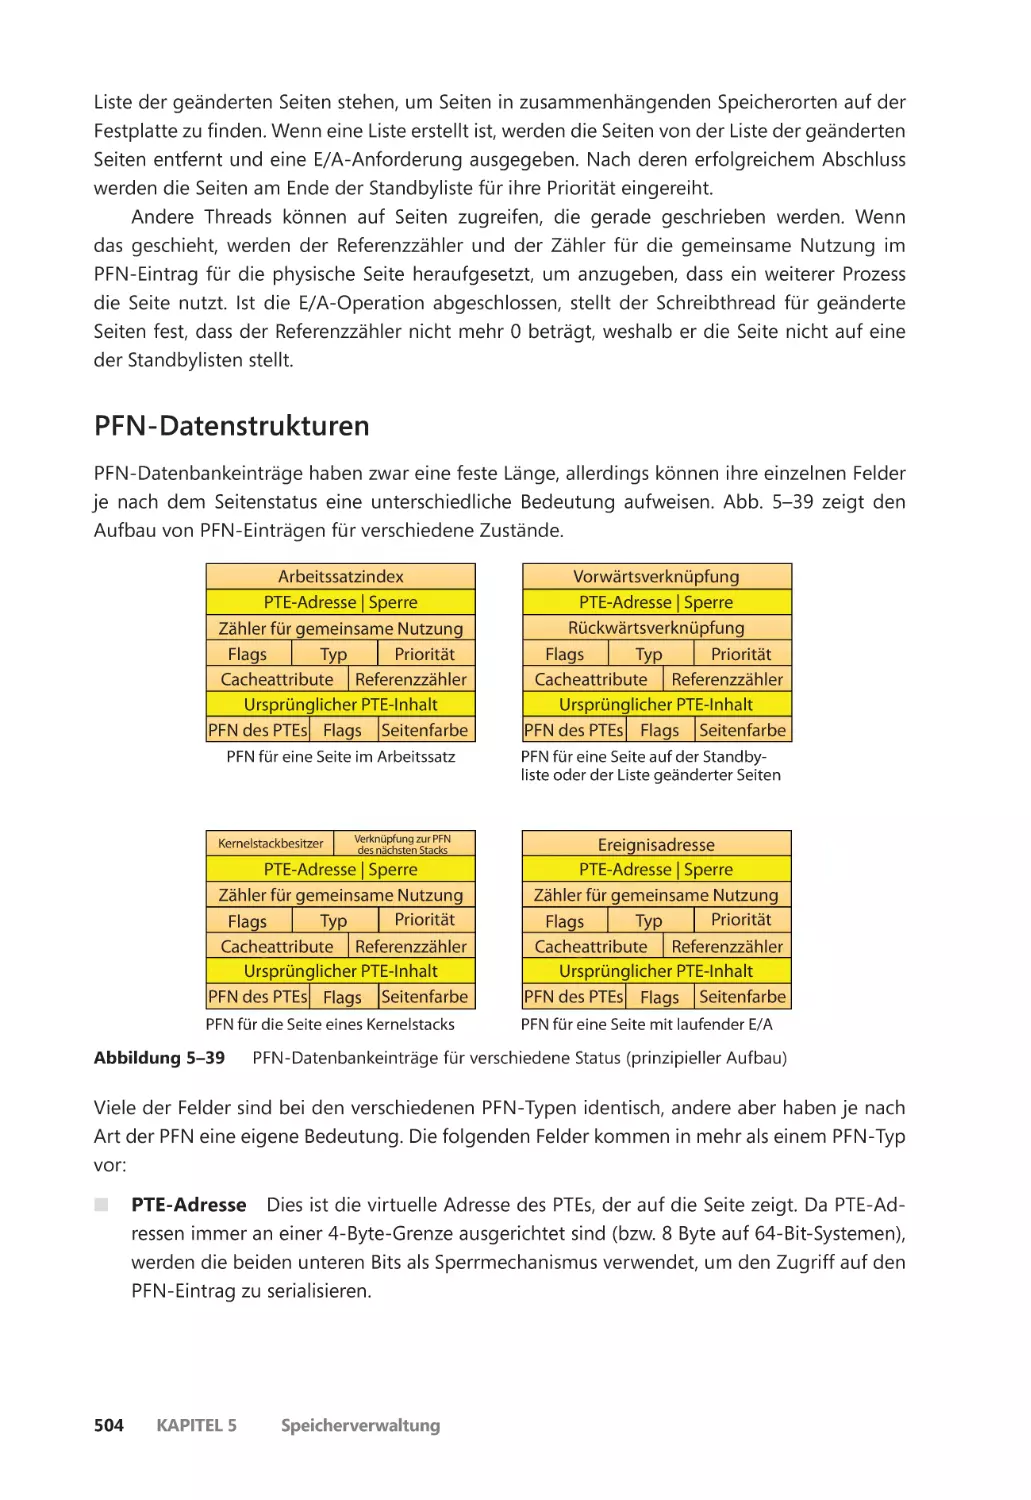 PFN-Datenstrukturen